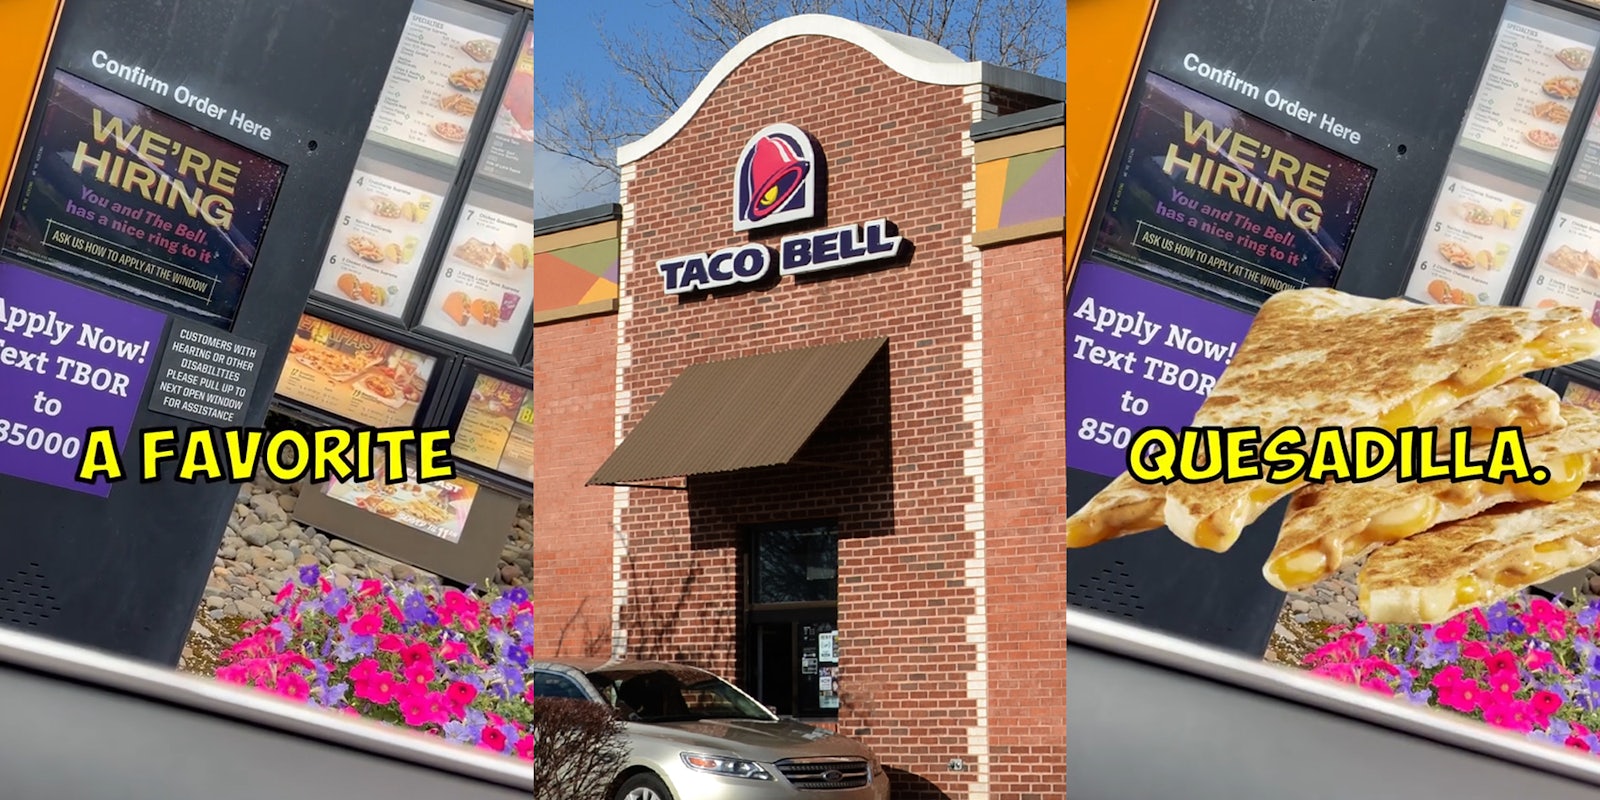 Taco bell drive thru menu with caption 'A FAVORITE' (l) Taco Bell drive thru window with sign (c) Taco bell drive thru menu with caption 'QUESADILLA.' (r)